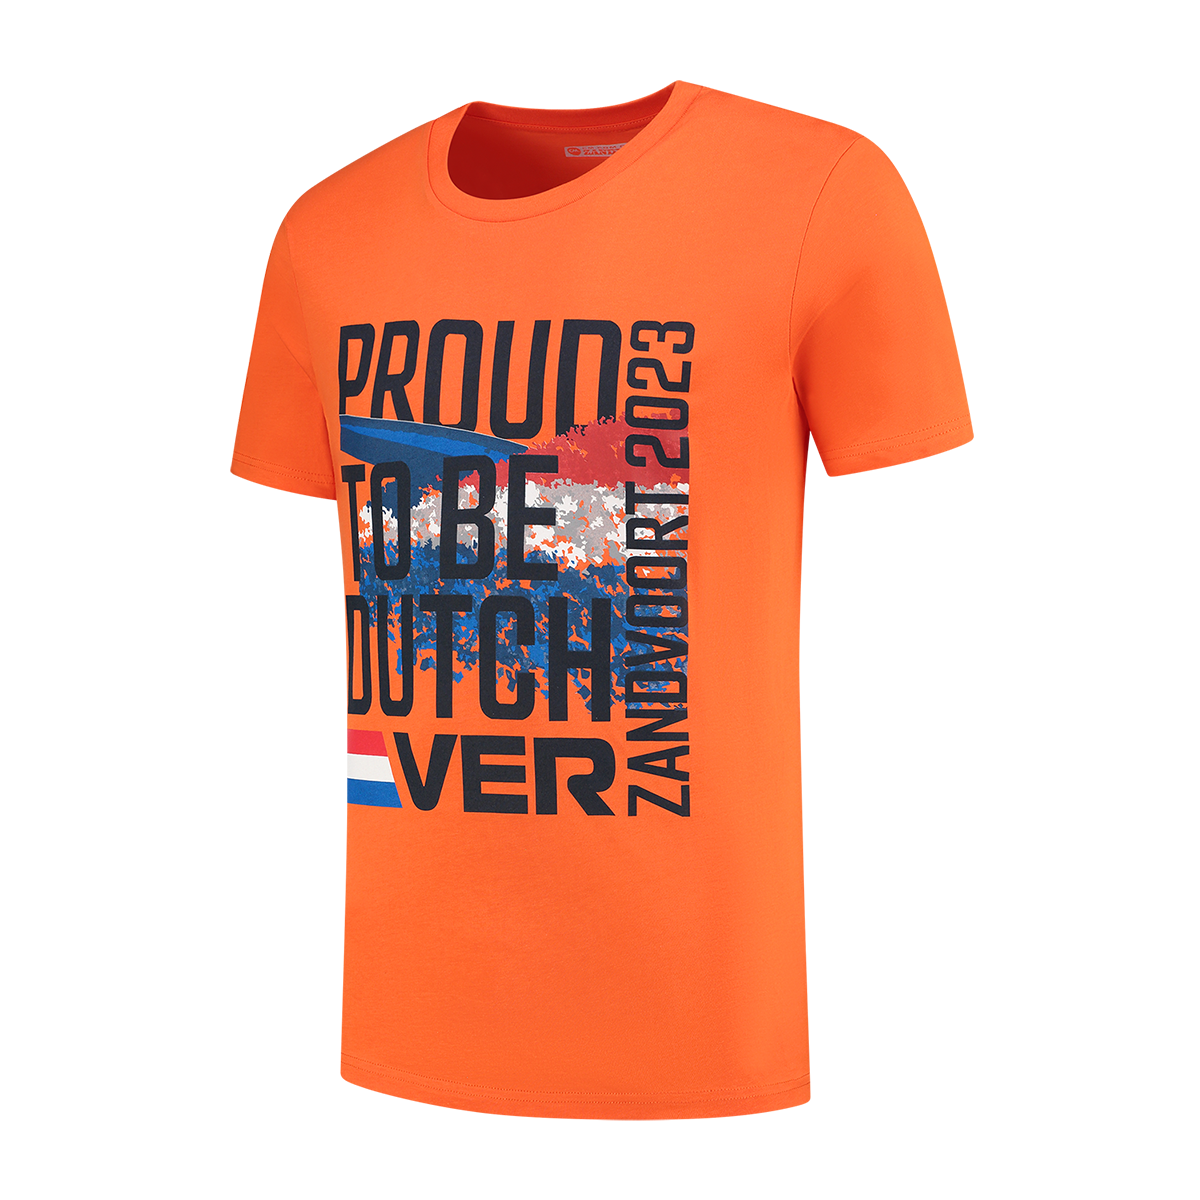 Proud to be Dutch - T-shirt Oranje - XXXL - Max Verstappen